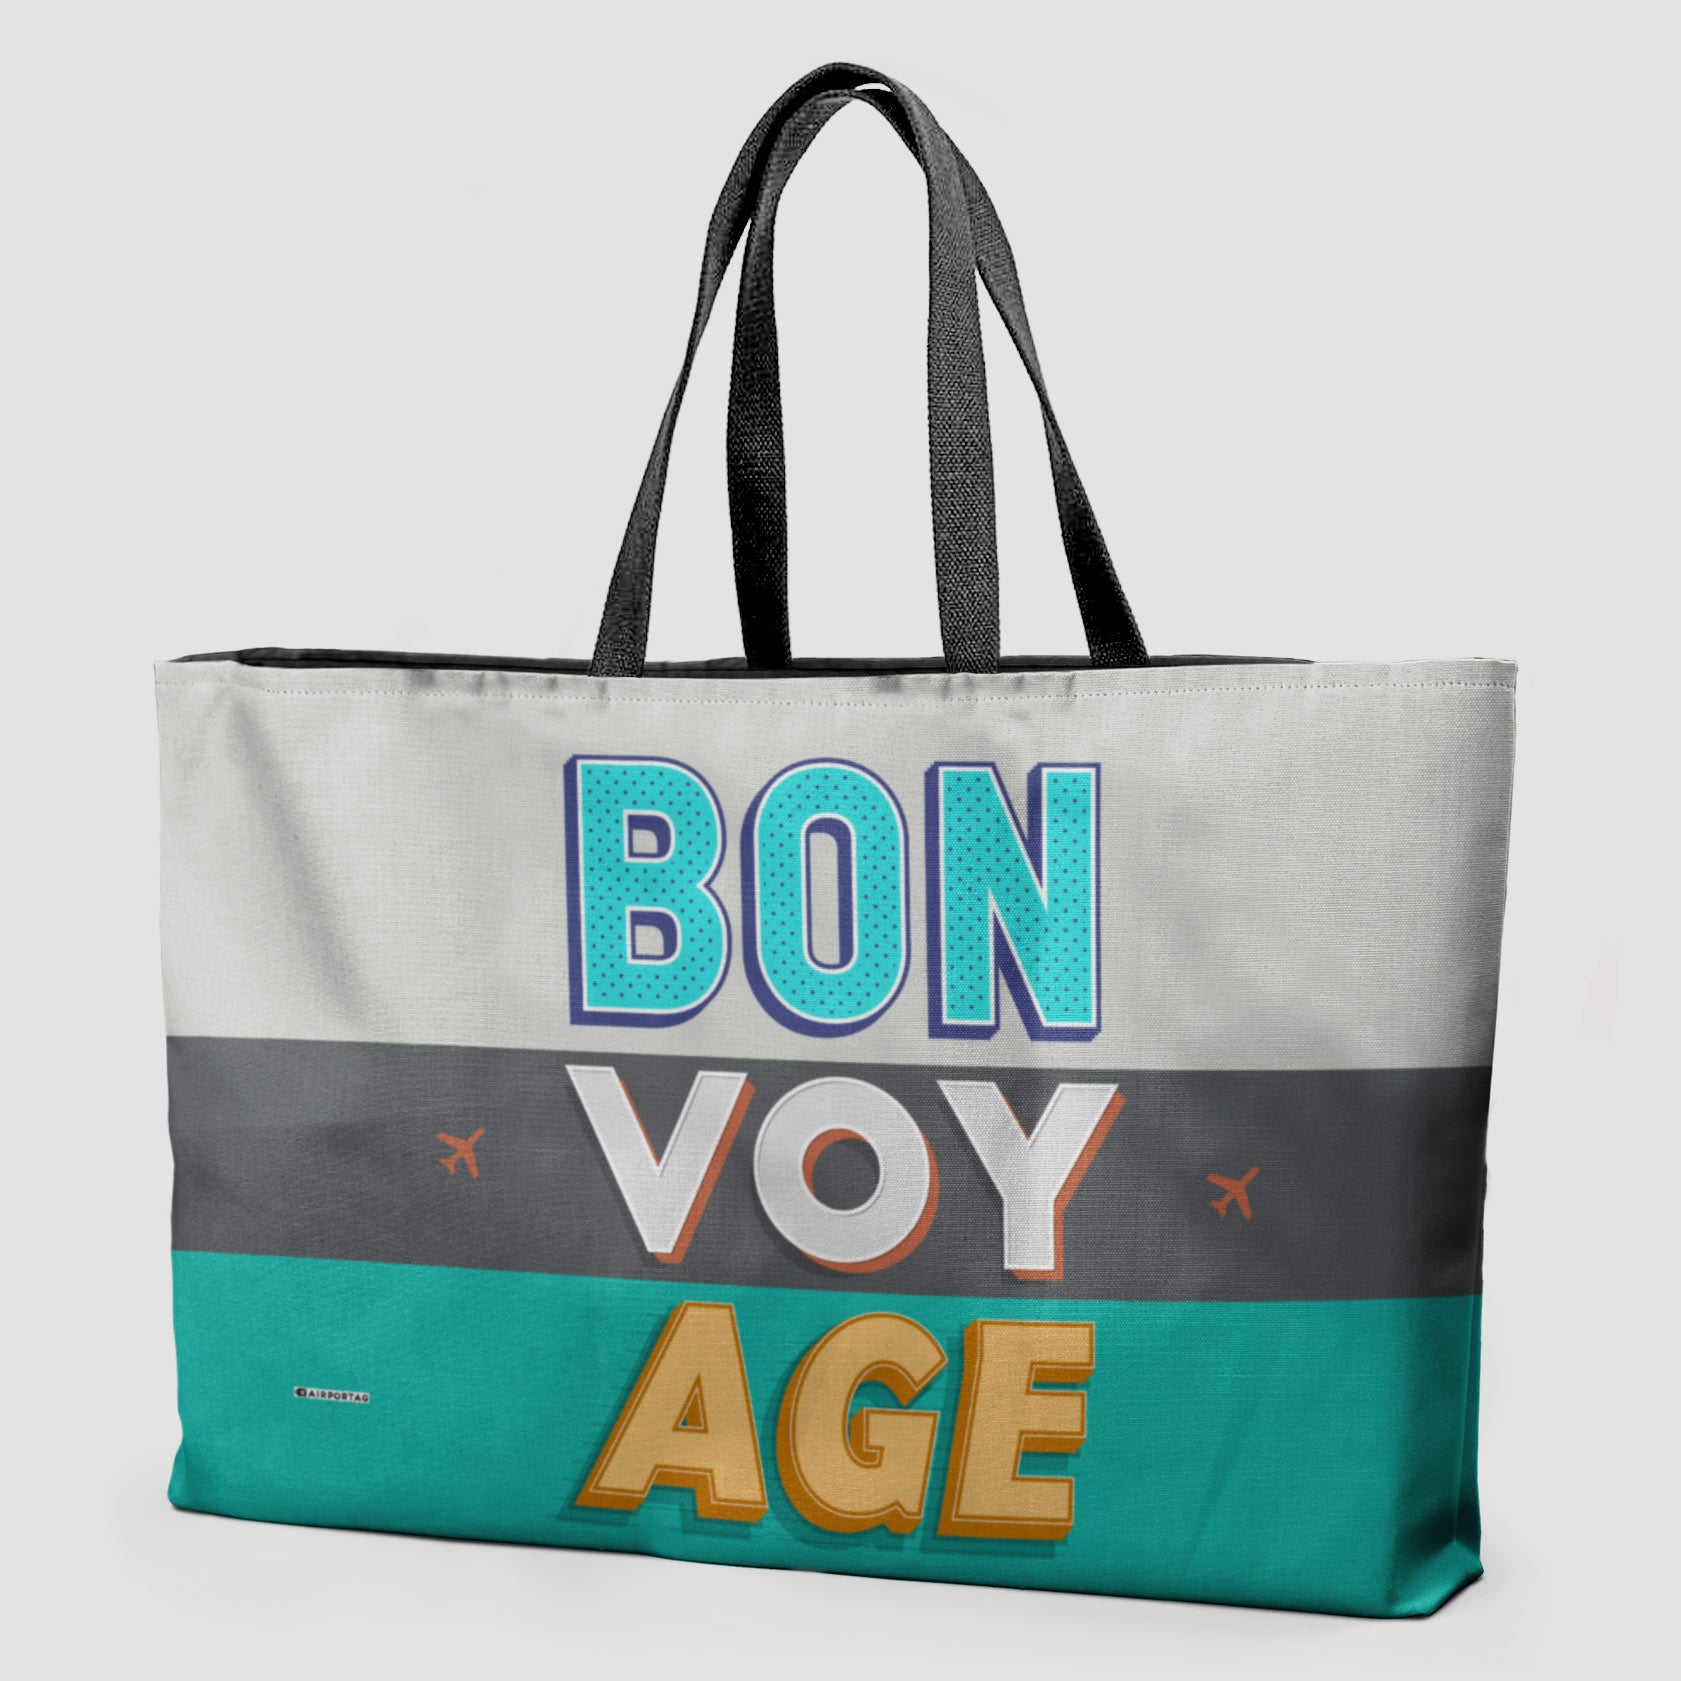 BON VOY AGE - Weekender Bag - Airportag